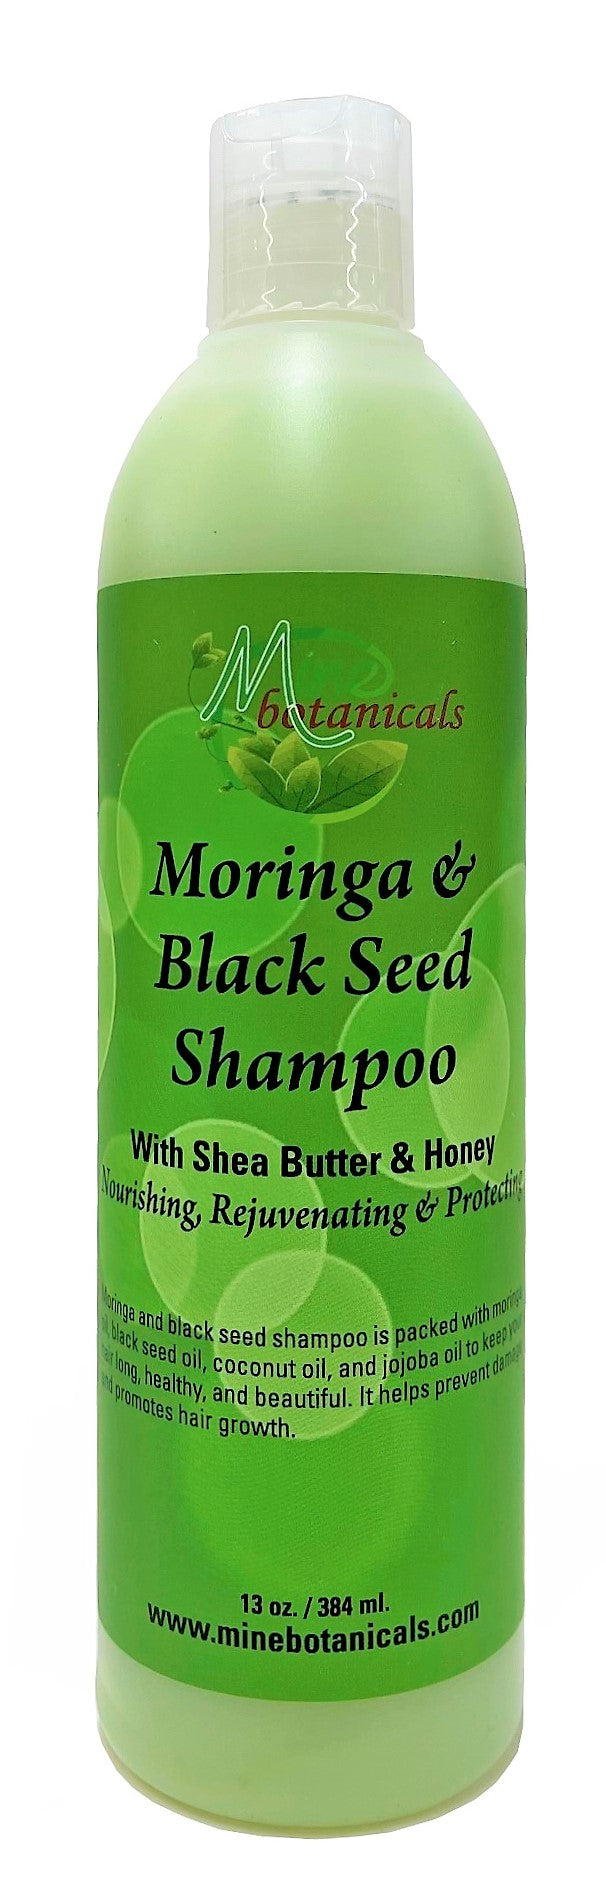 Moringa & Black Seed Shampoo